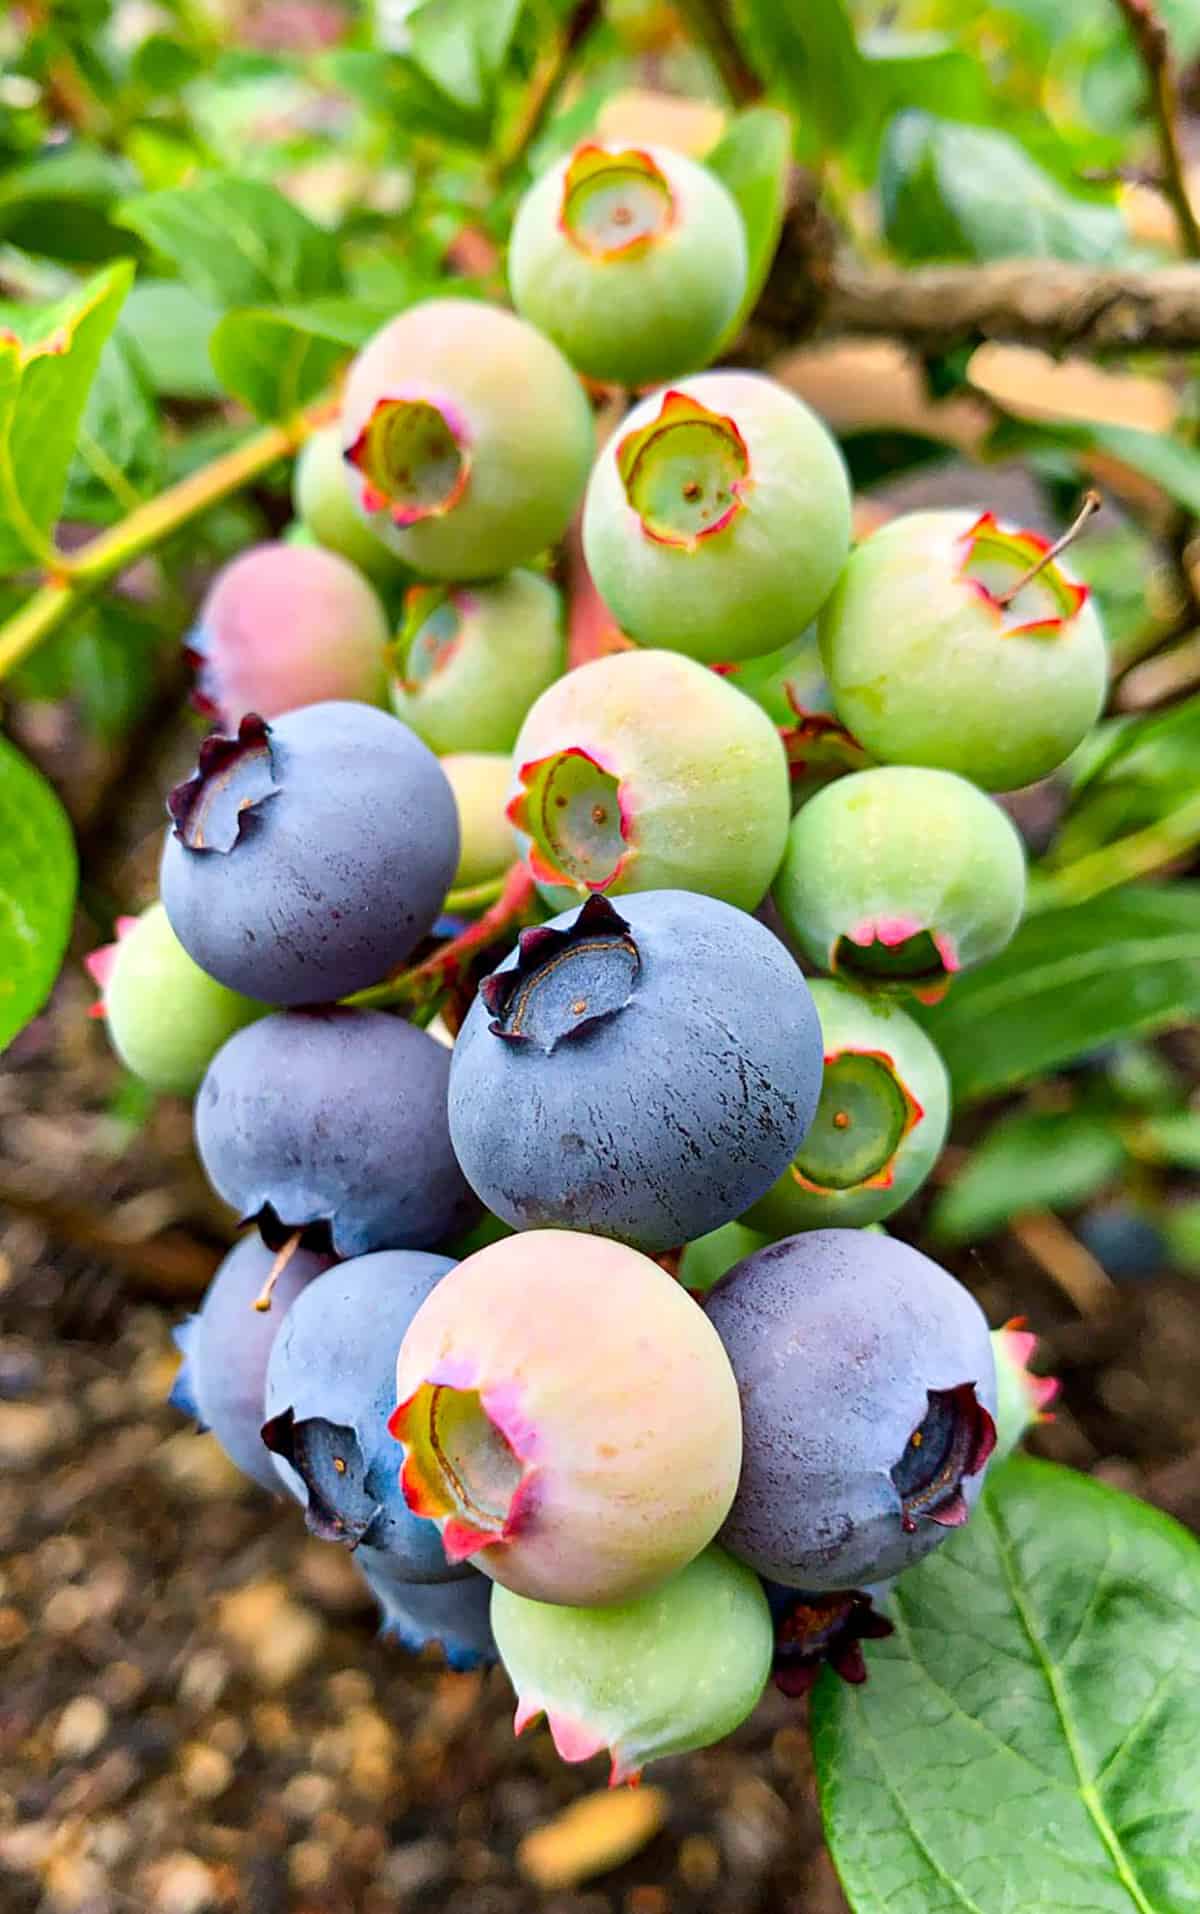 Homegrown blueberries in my backyard garden.